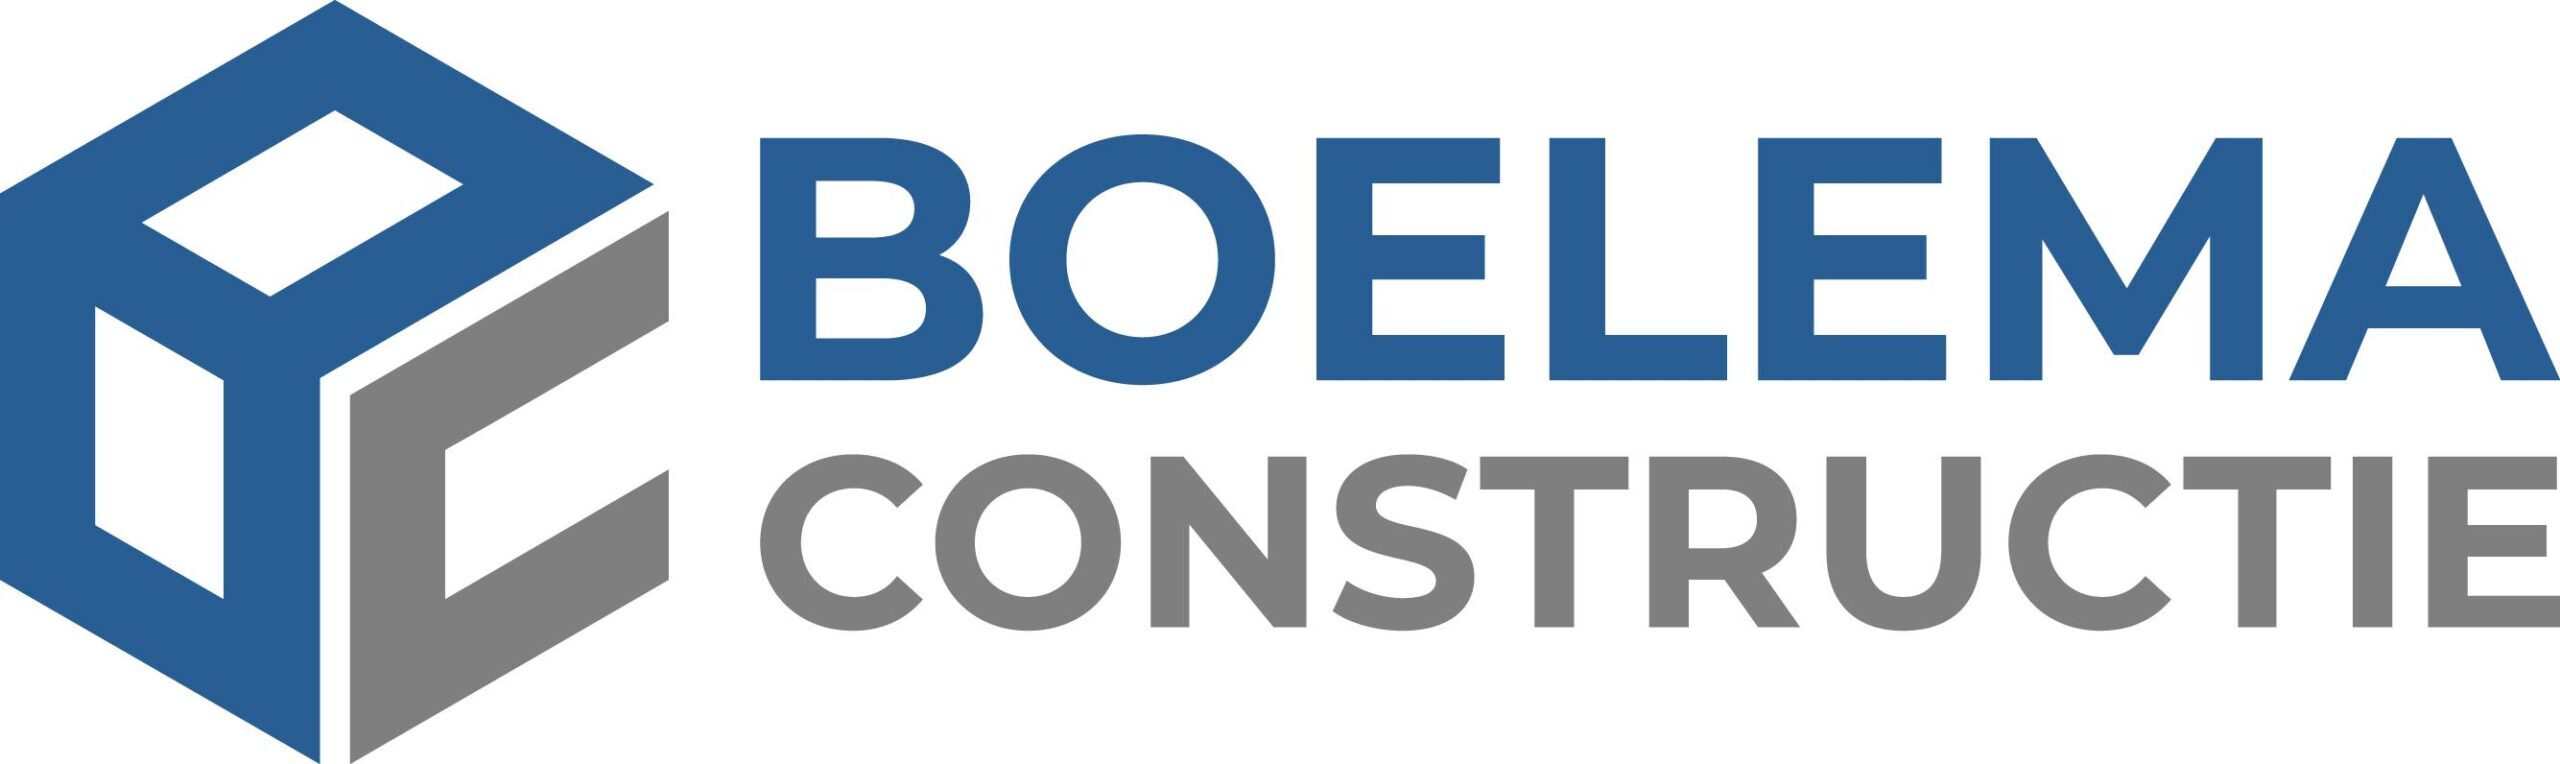 Boelema Constructie B.V.